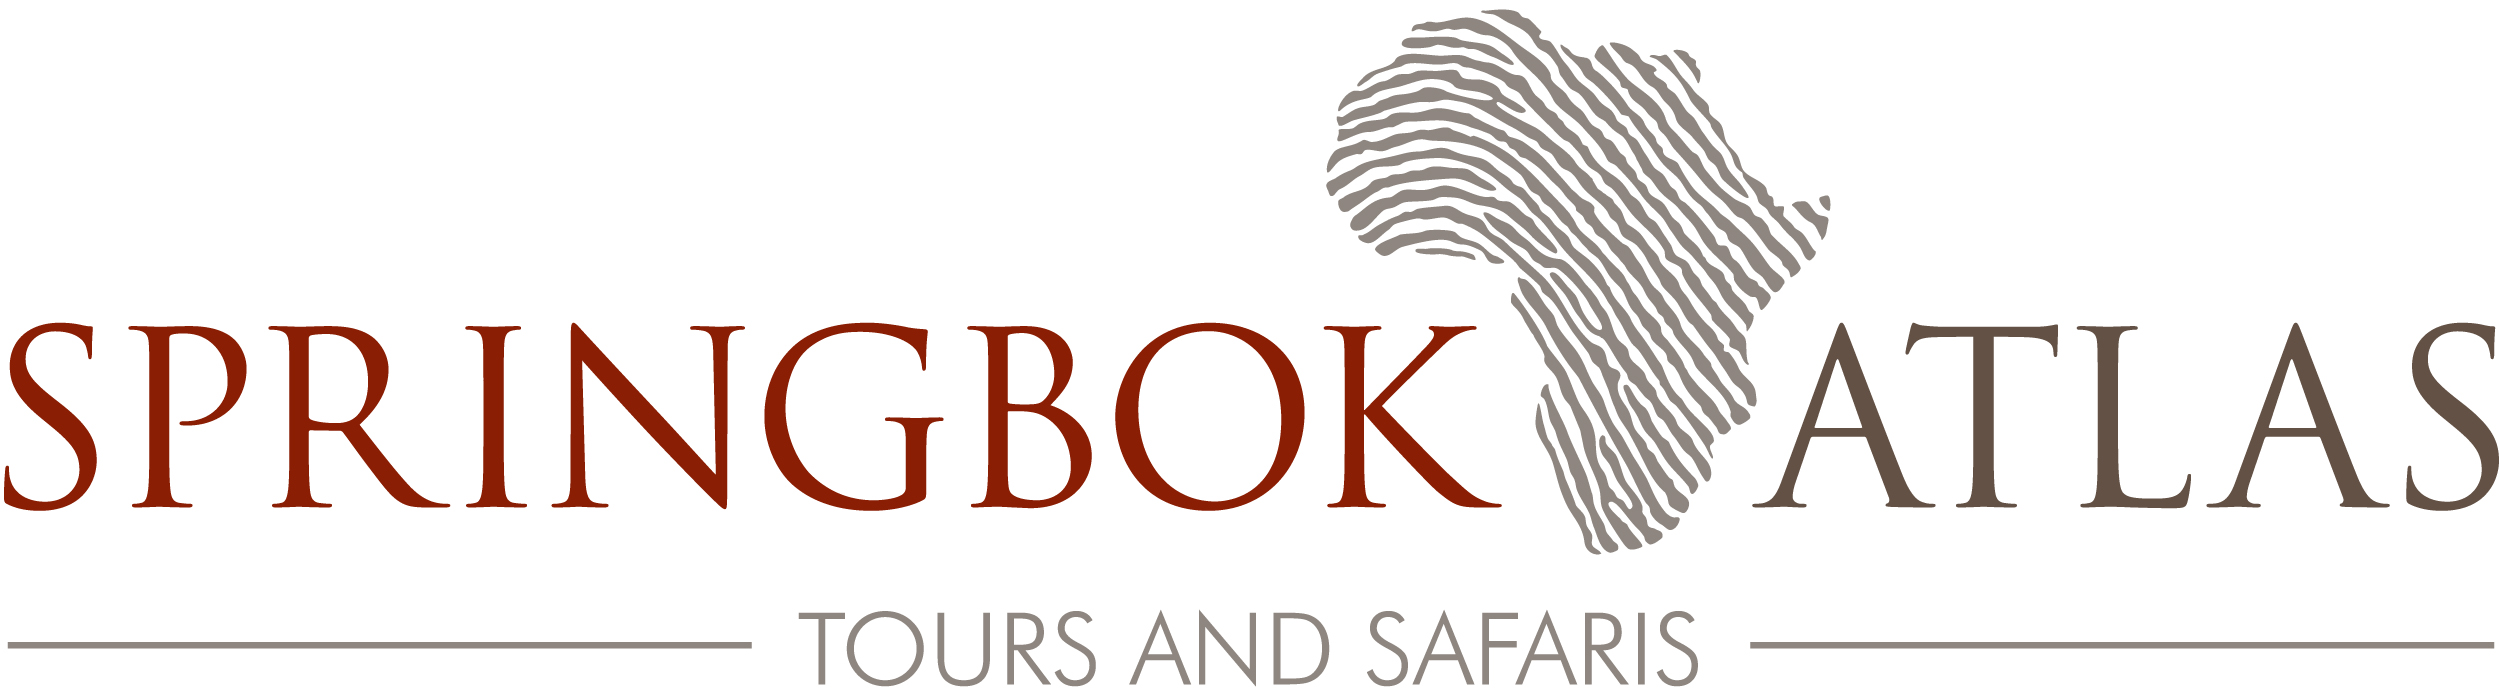 Image result for Springbok Atlas Tours and Safaris